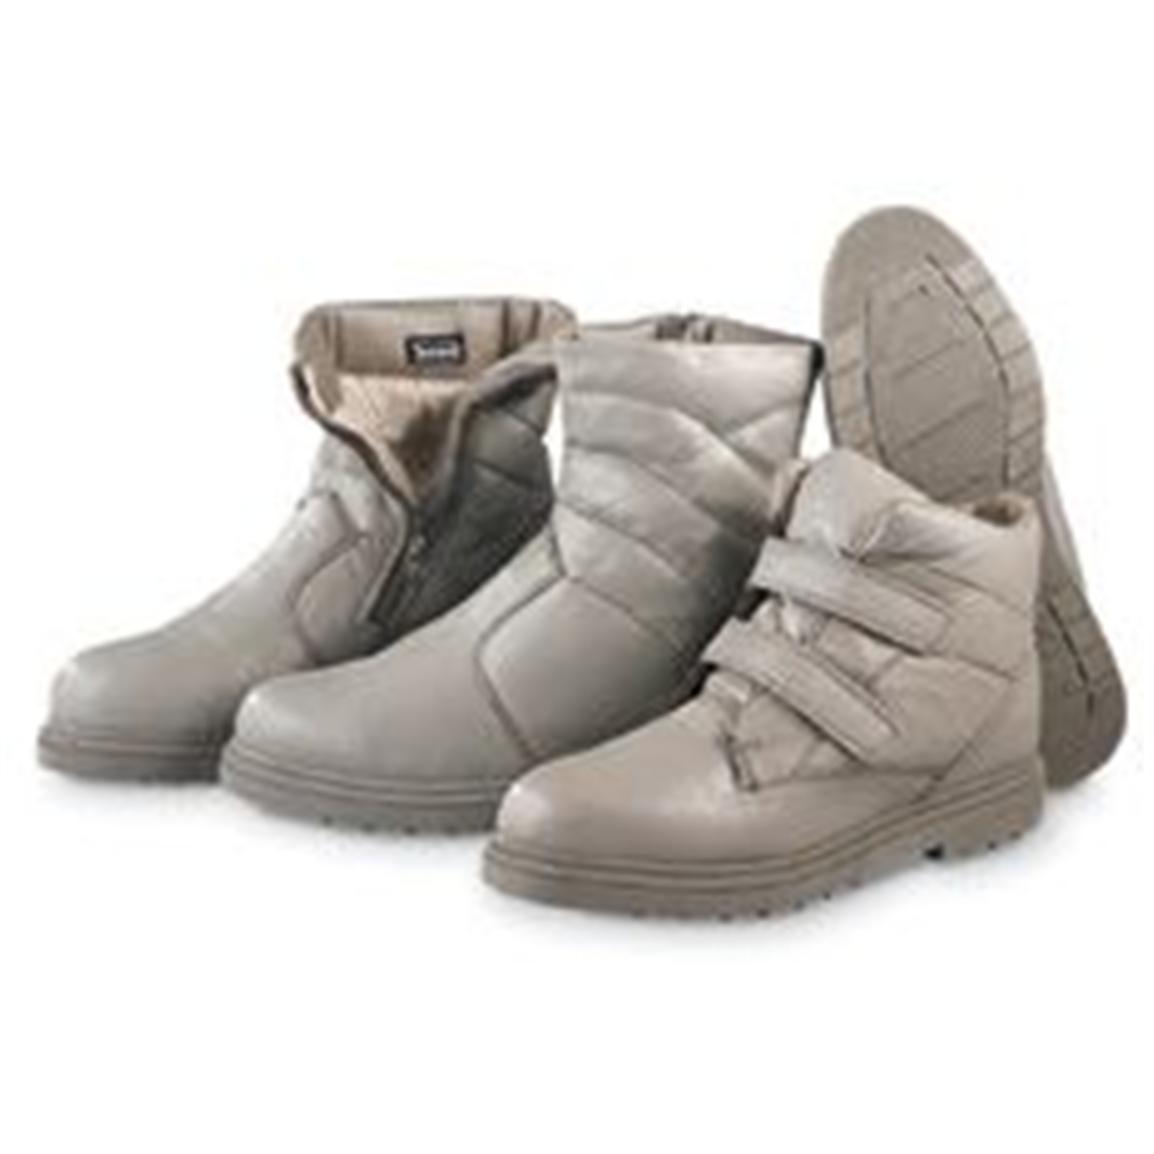 mens velcro snow boots